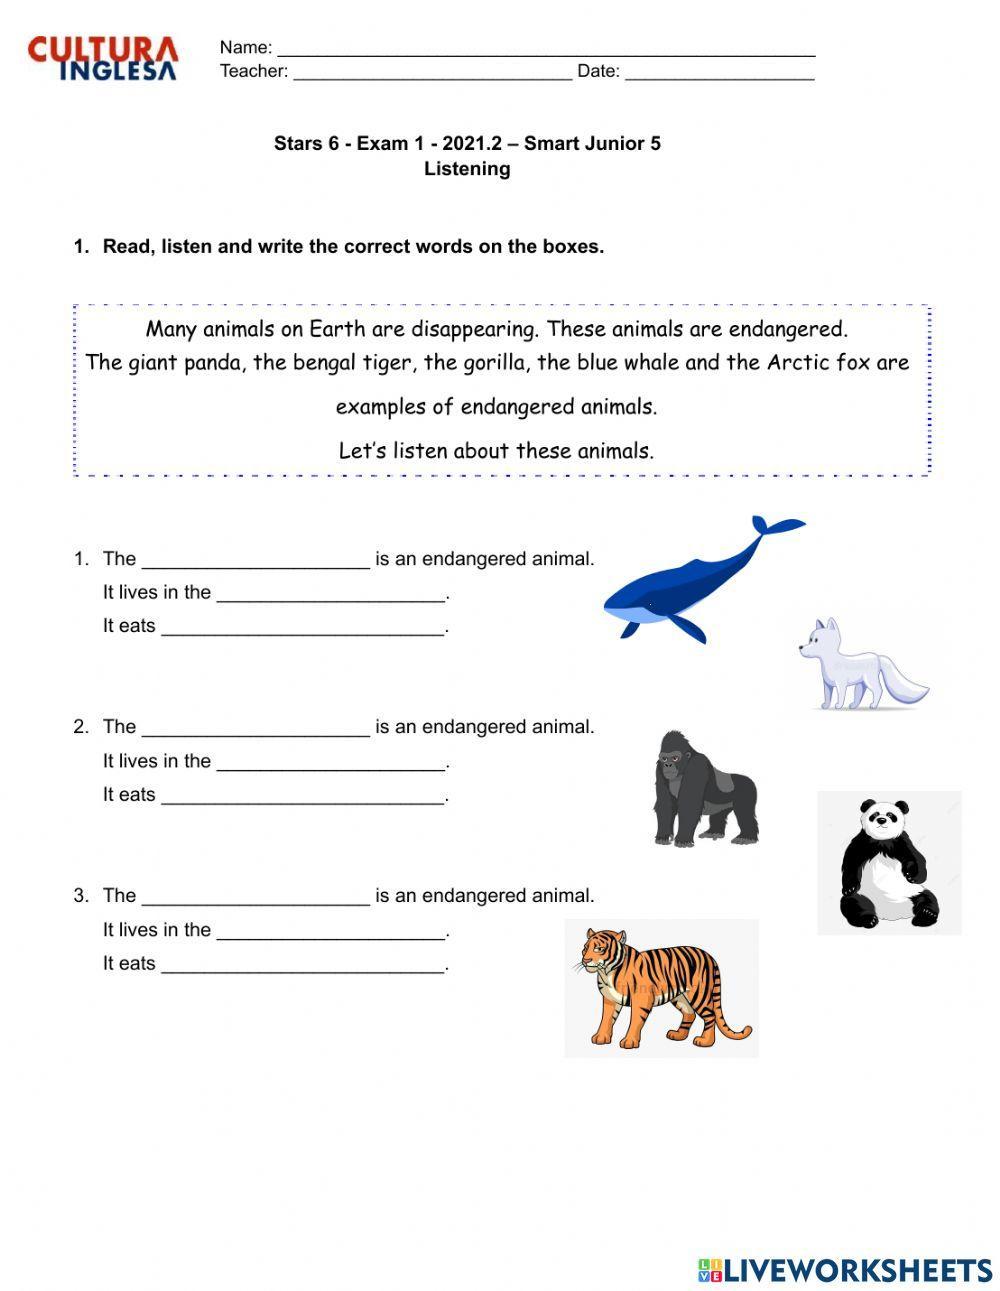 Stars 6 - Exam 1: Listening: Endangered Animals